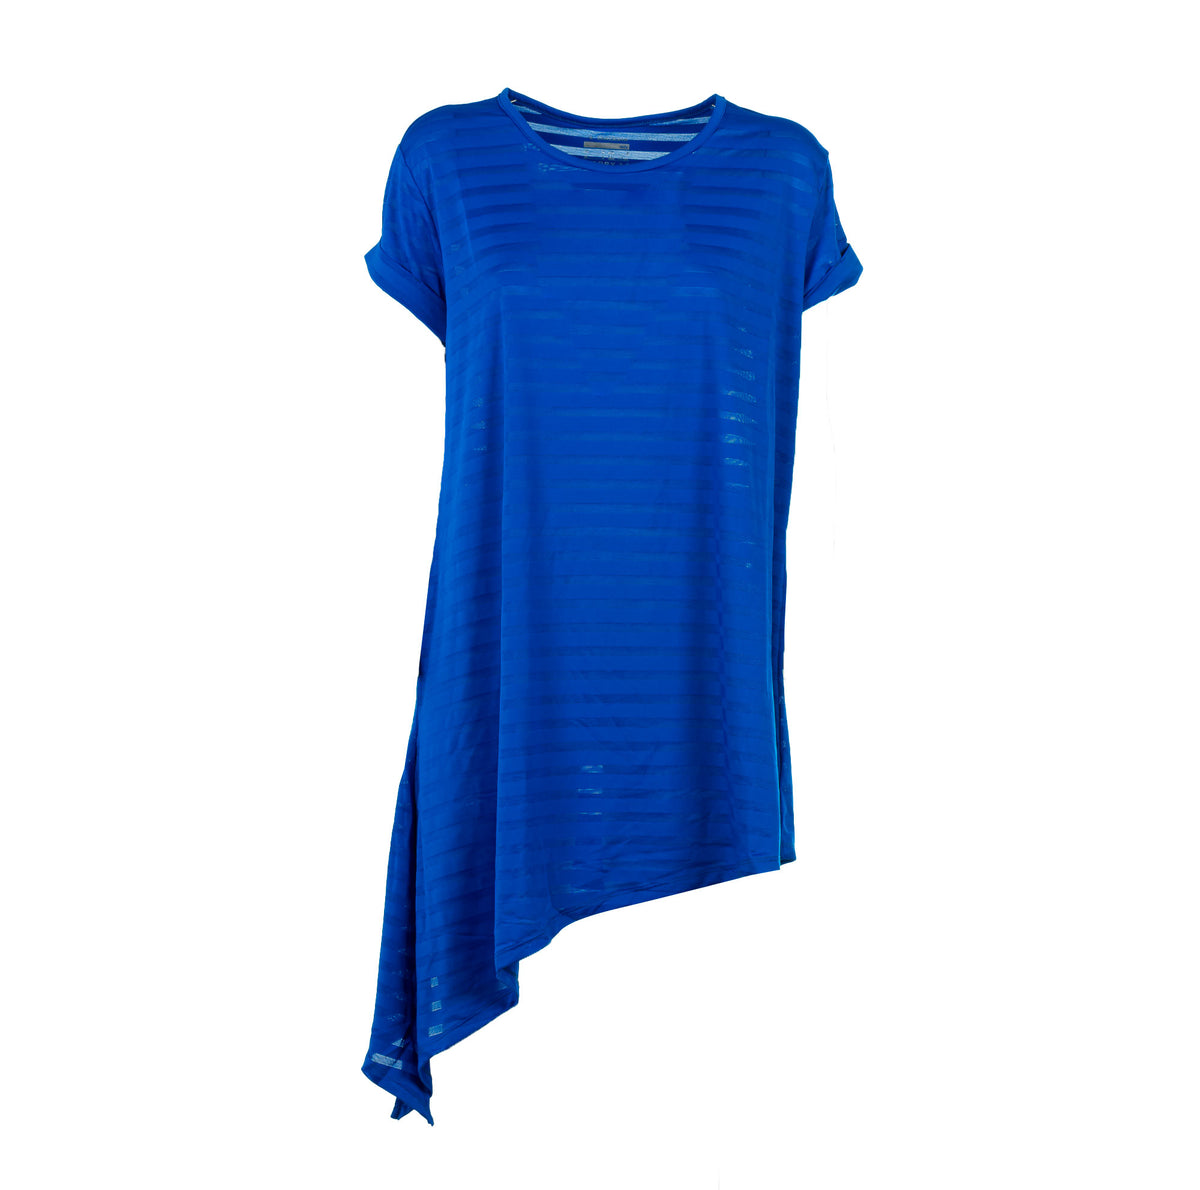 DIADORA | T-Shirt Sportiva manica corta royal blue Donna | 102.172158.01